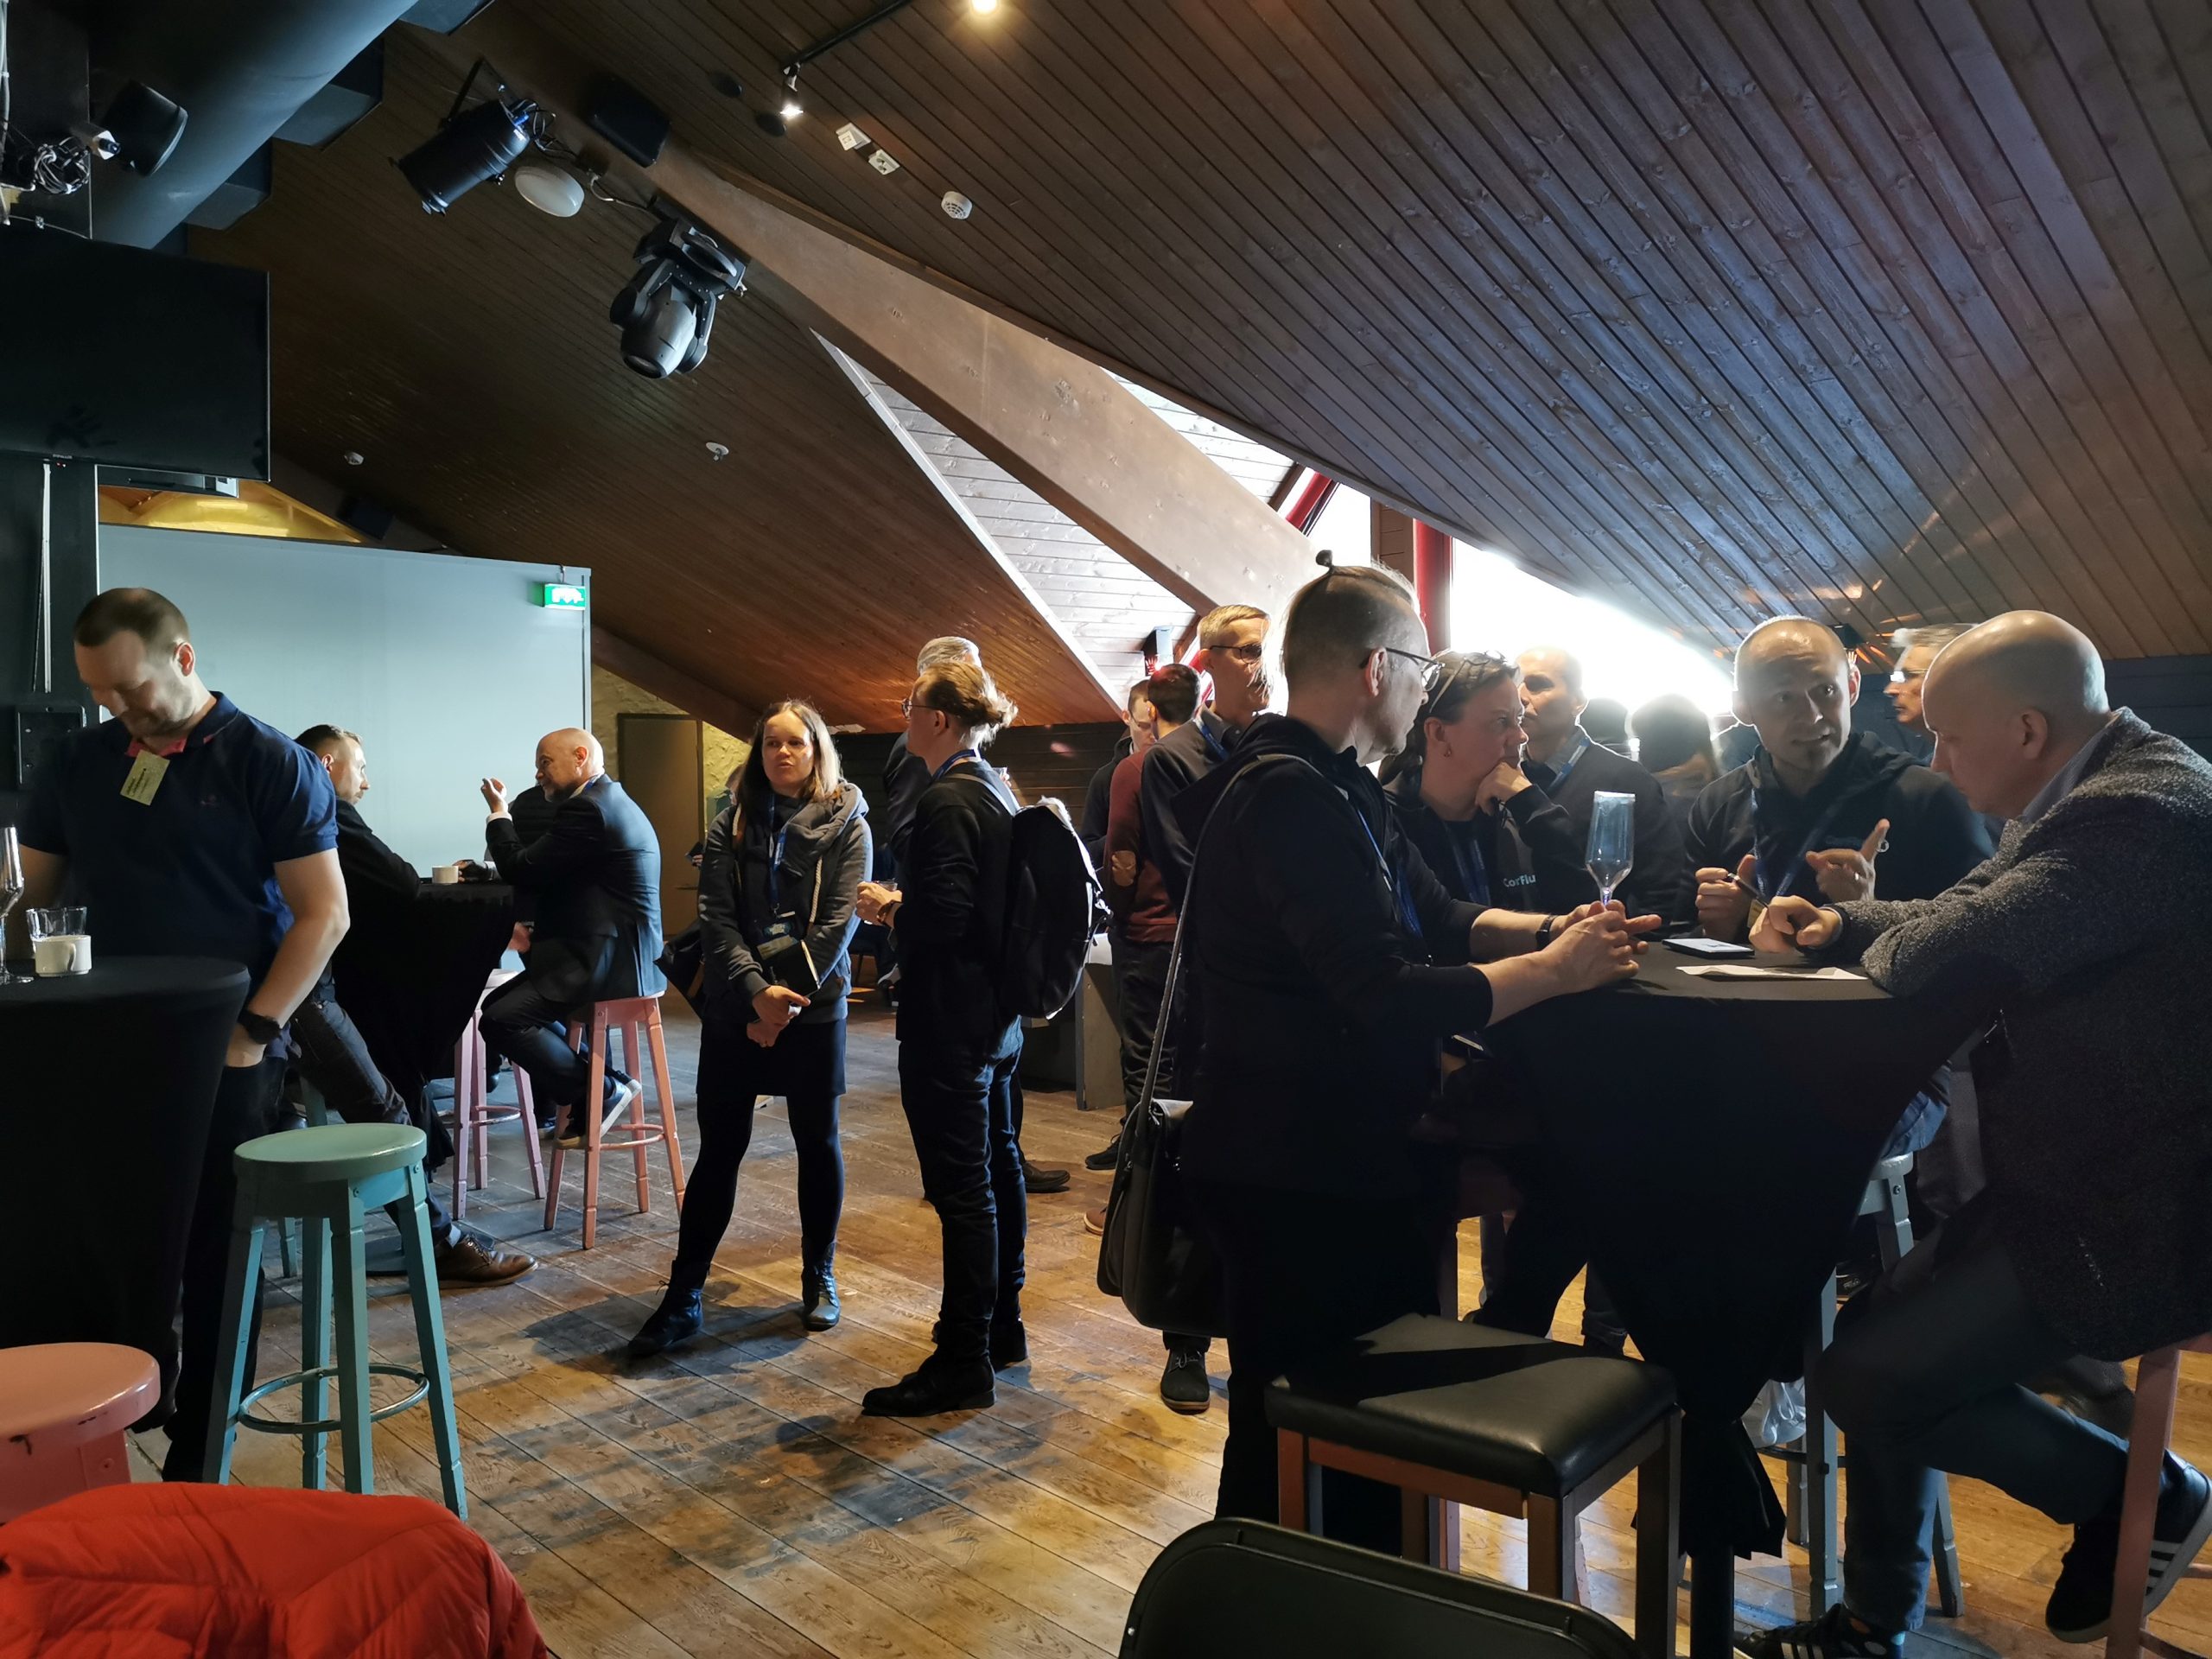 Kuopio Health side event @Tahko SLP fosters networking